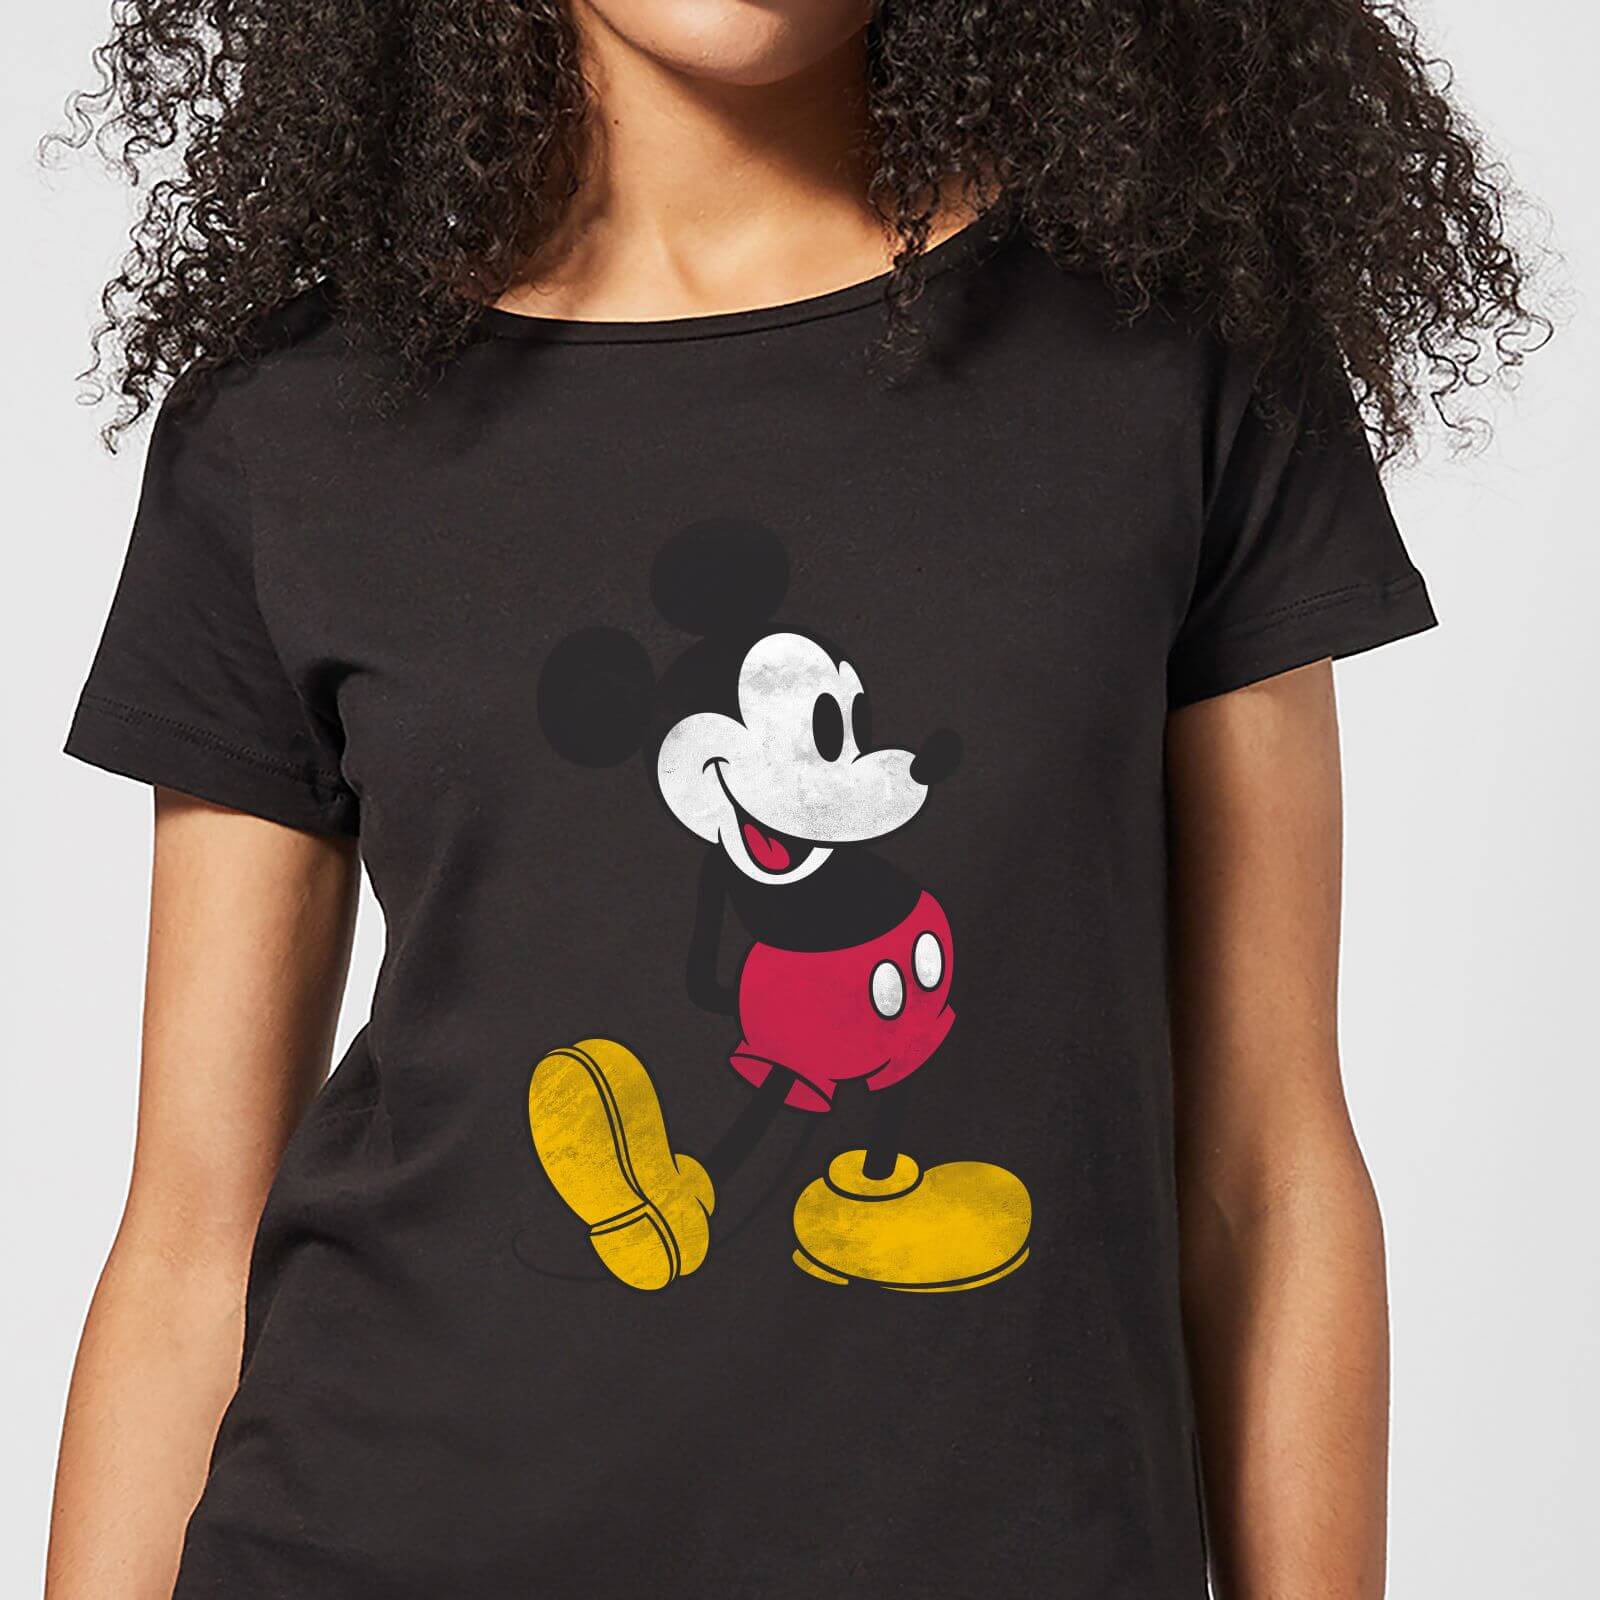 Disney Mickey Mouse Classic Kick Women's T-Shirt - Black - XXL - Black